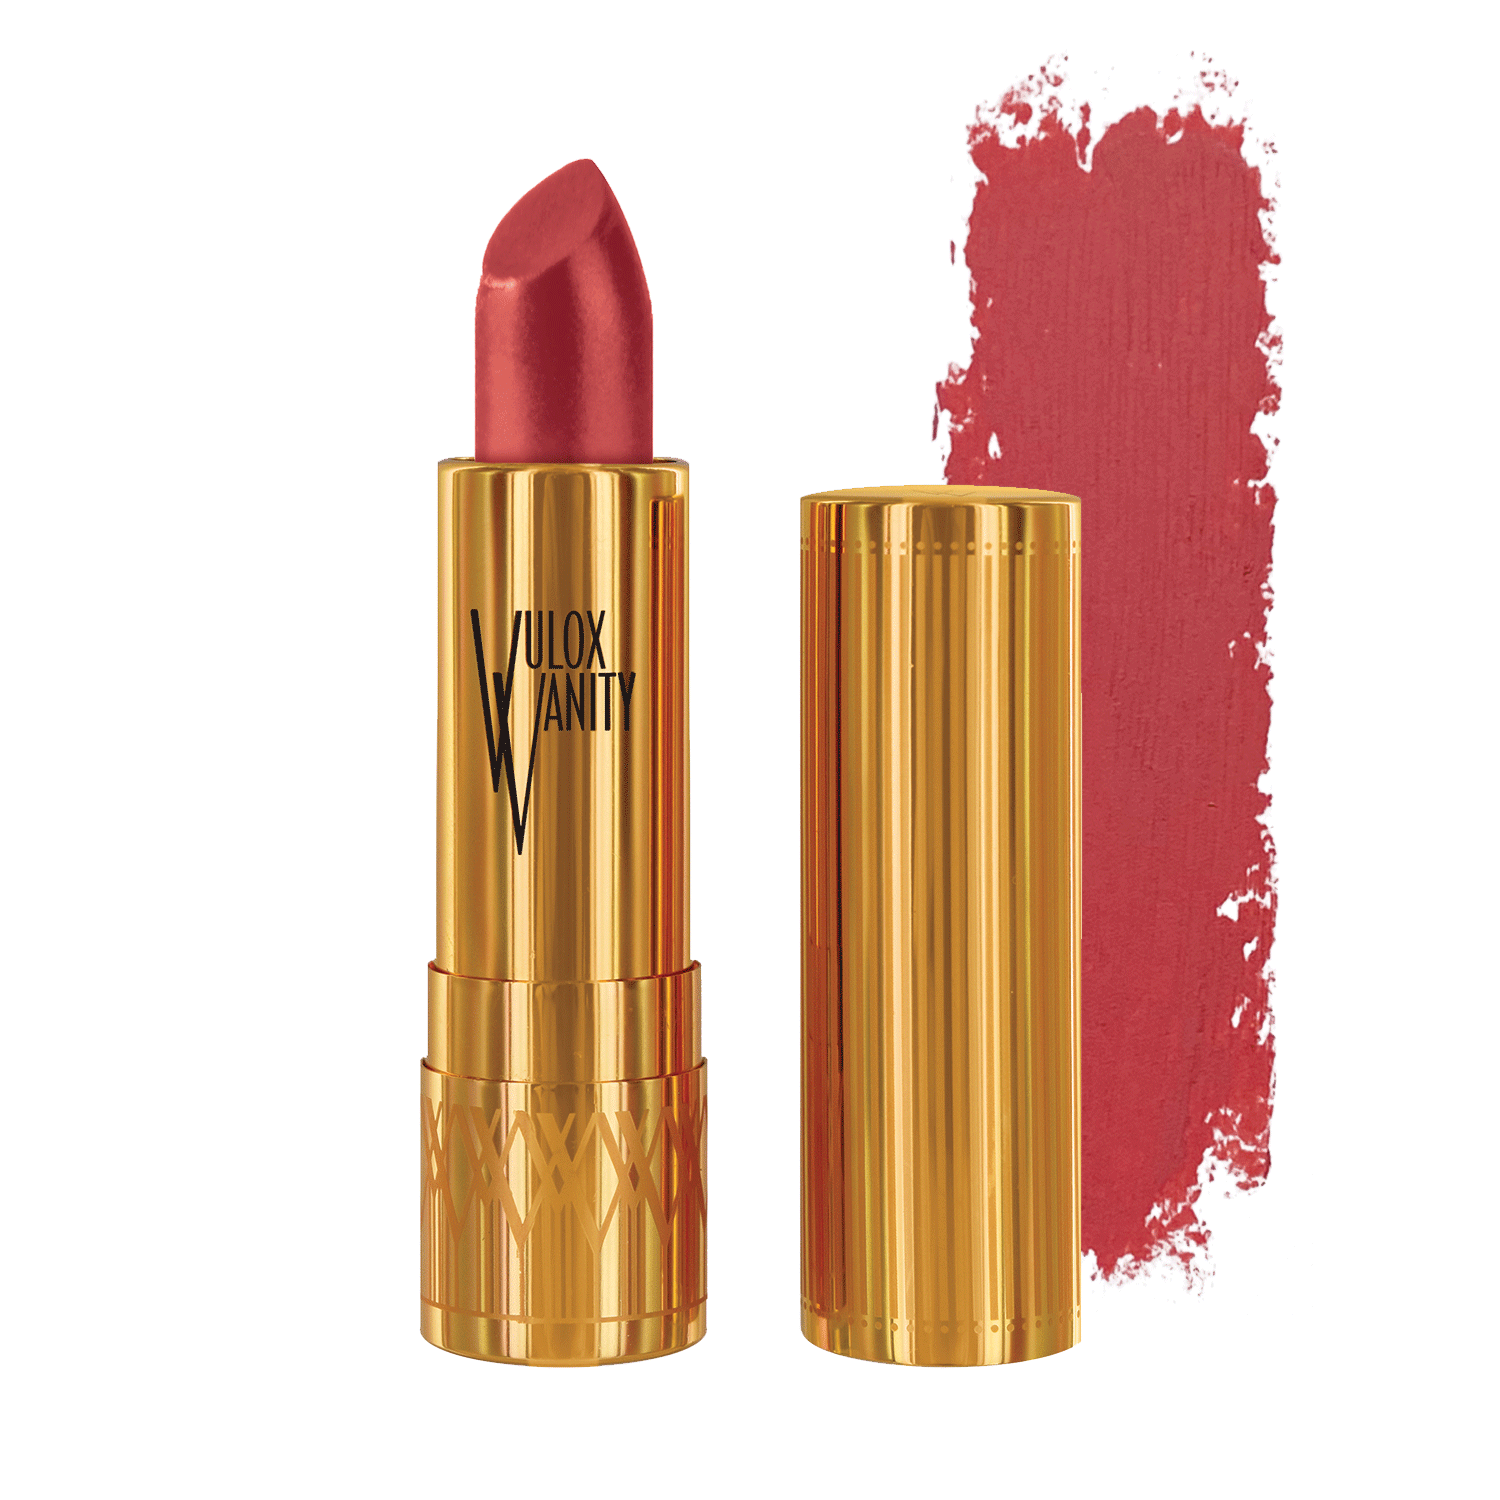 Vulox Vanity Glamour Lipstick in Rose Garden